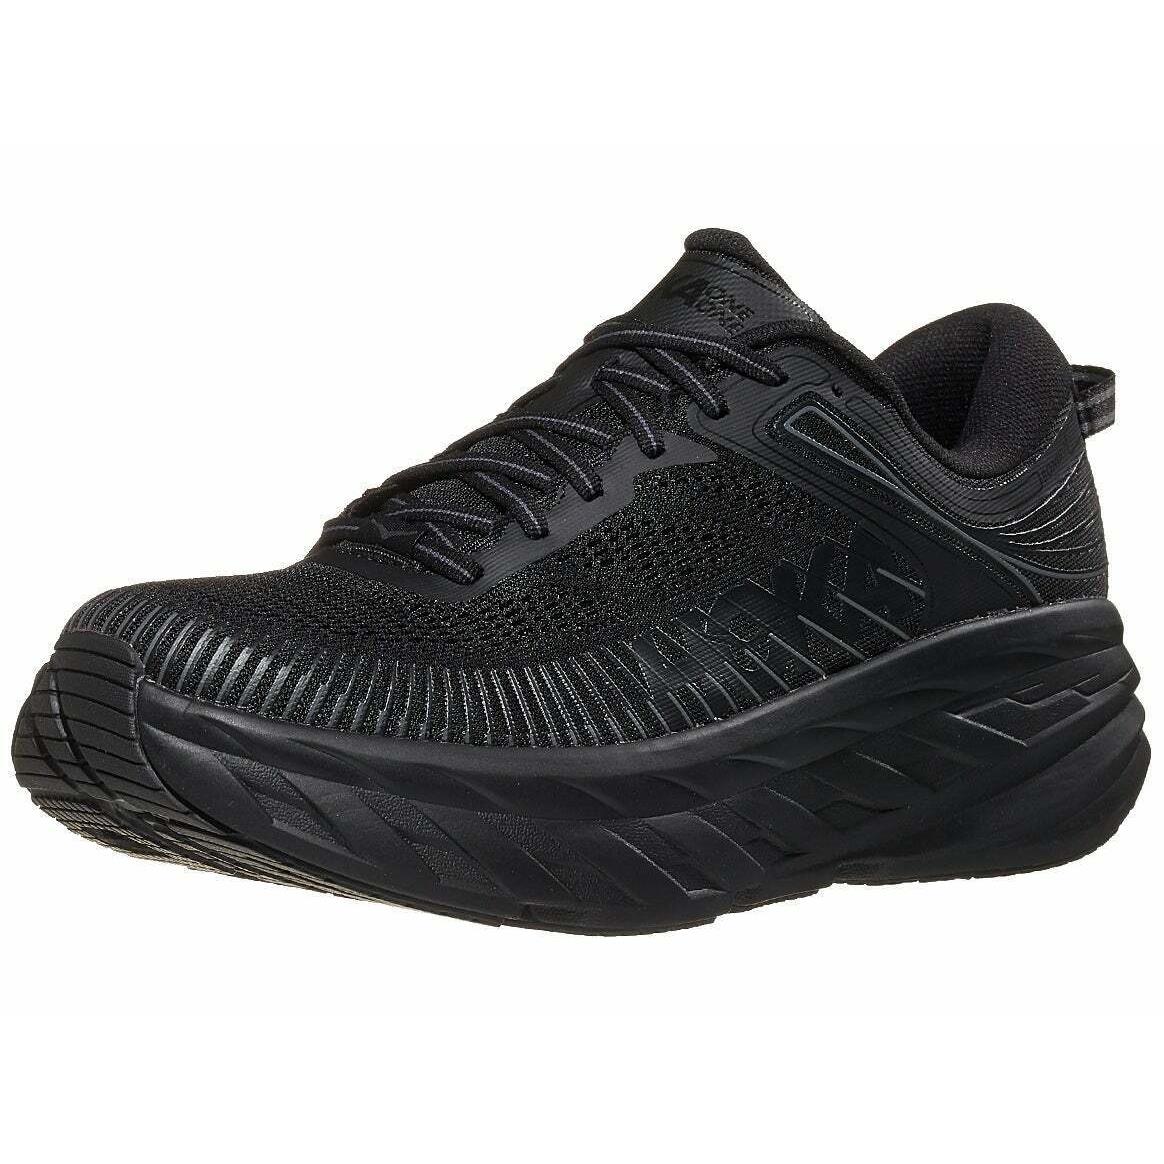 Hoka One One Bondi 7 Men`s Road Running Shoes Lightweight Cushioned Support Black/Black